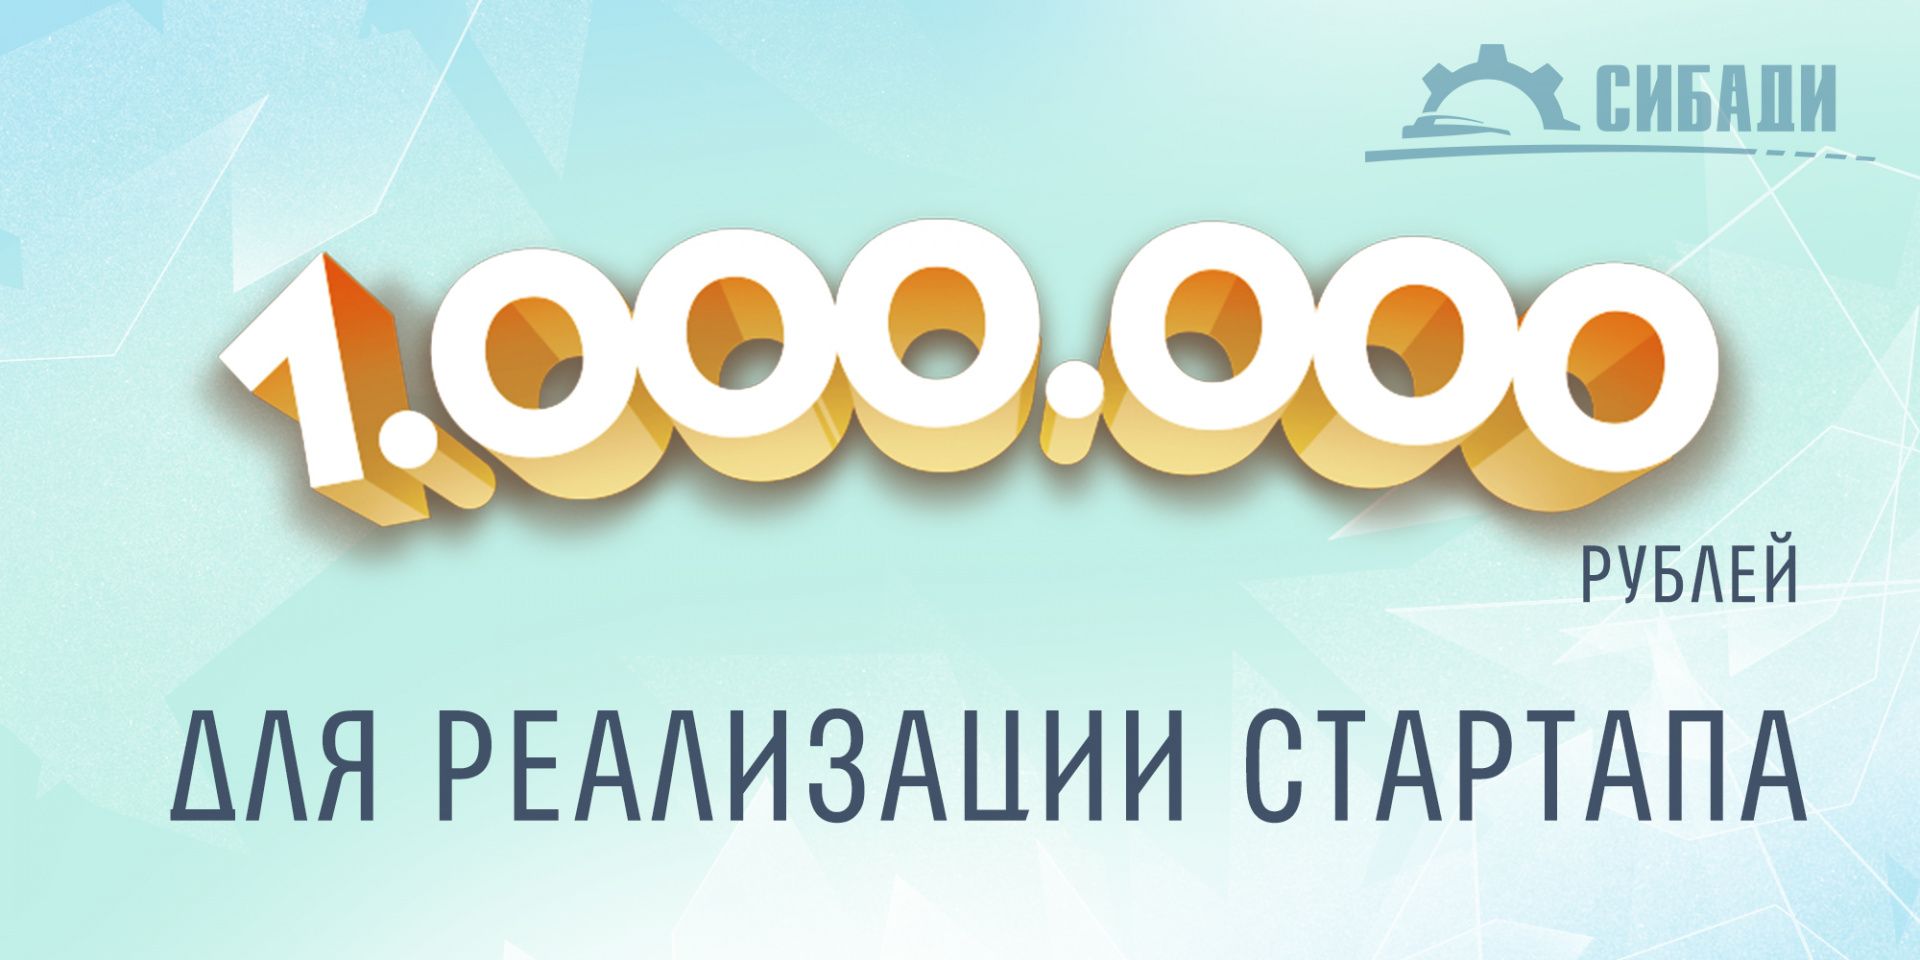 1 млн рублей на реализацию стартапа